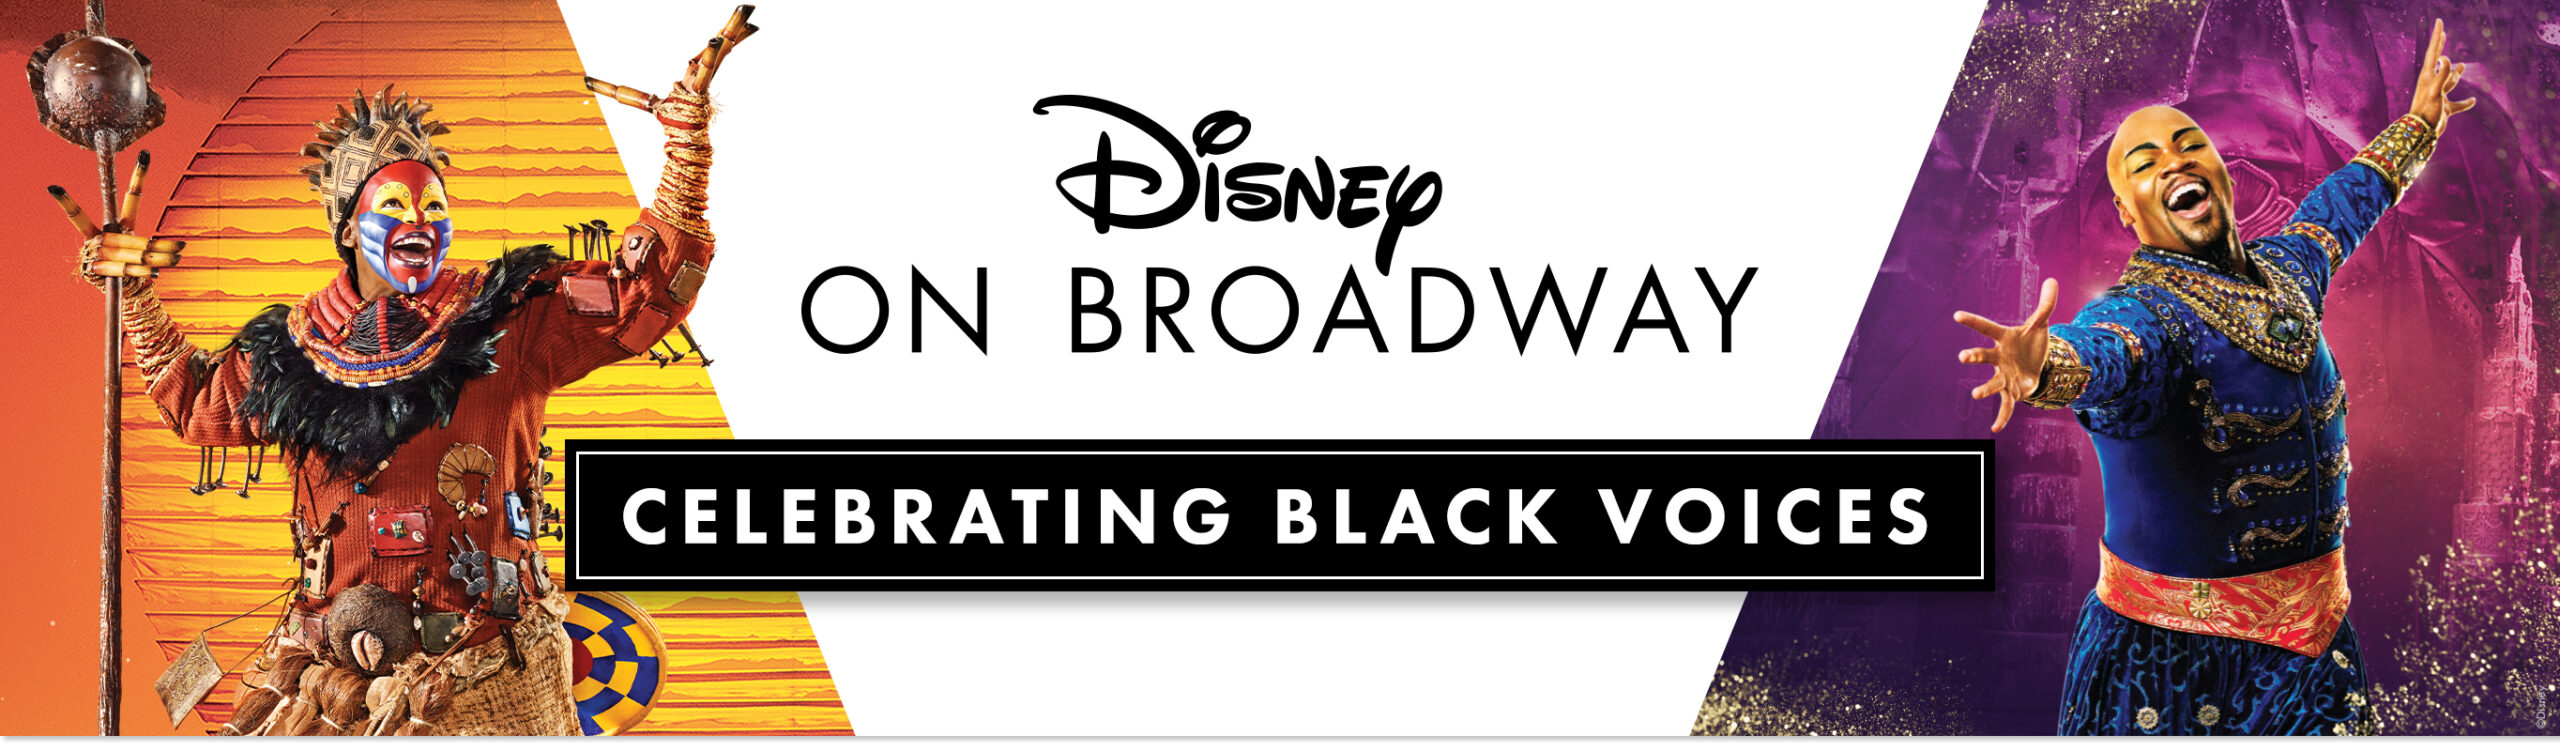 Disney on Broadway Celebrating Black Voices